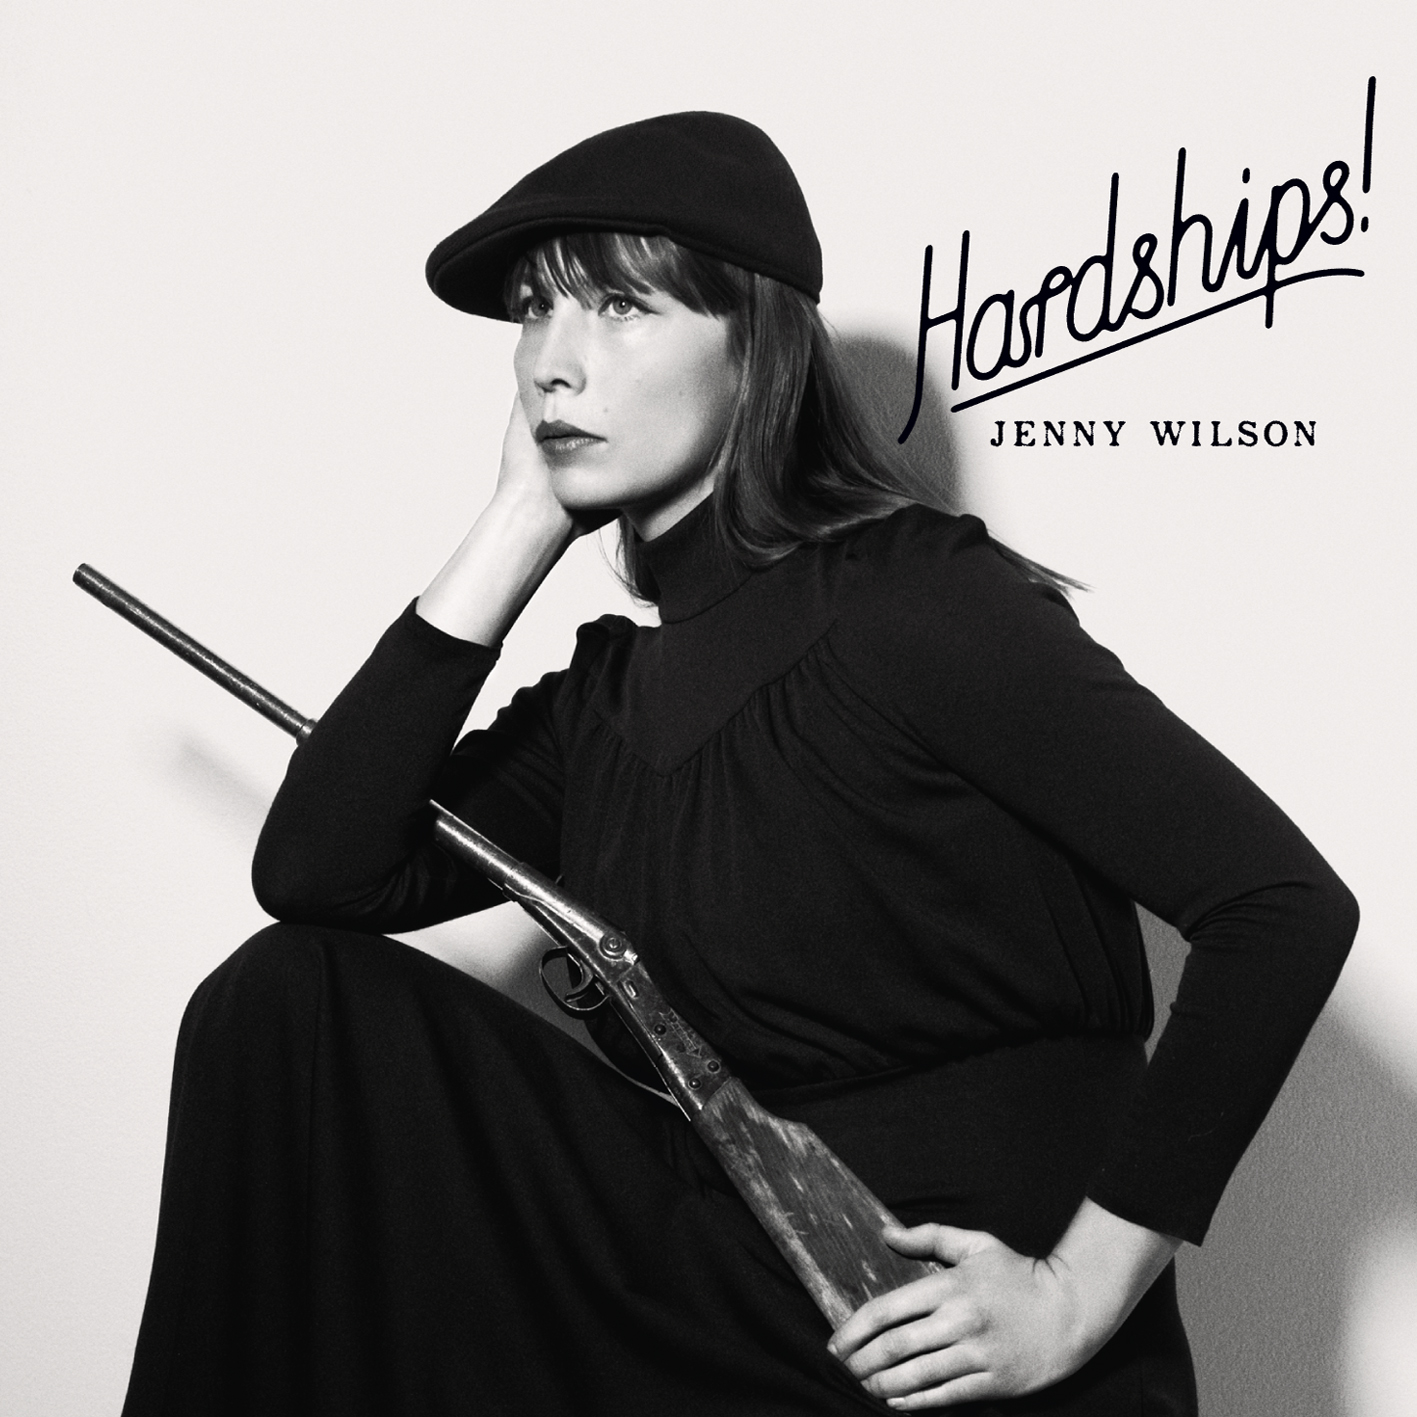 Jenny Wilson - Hardships! - CD